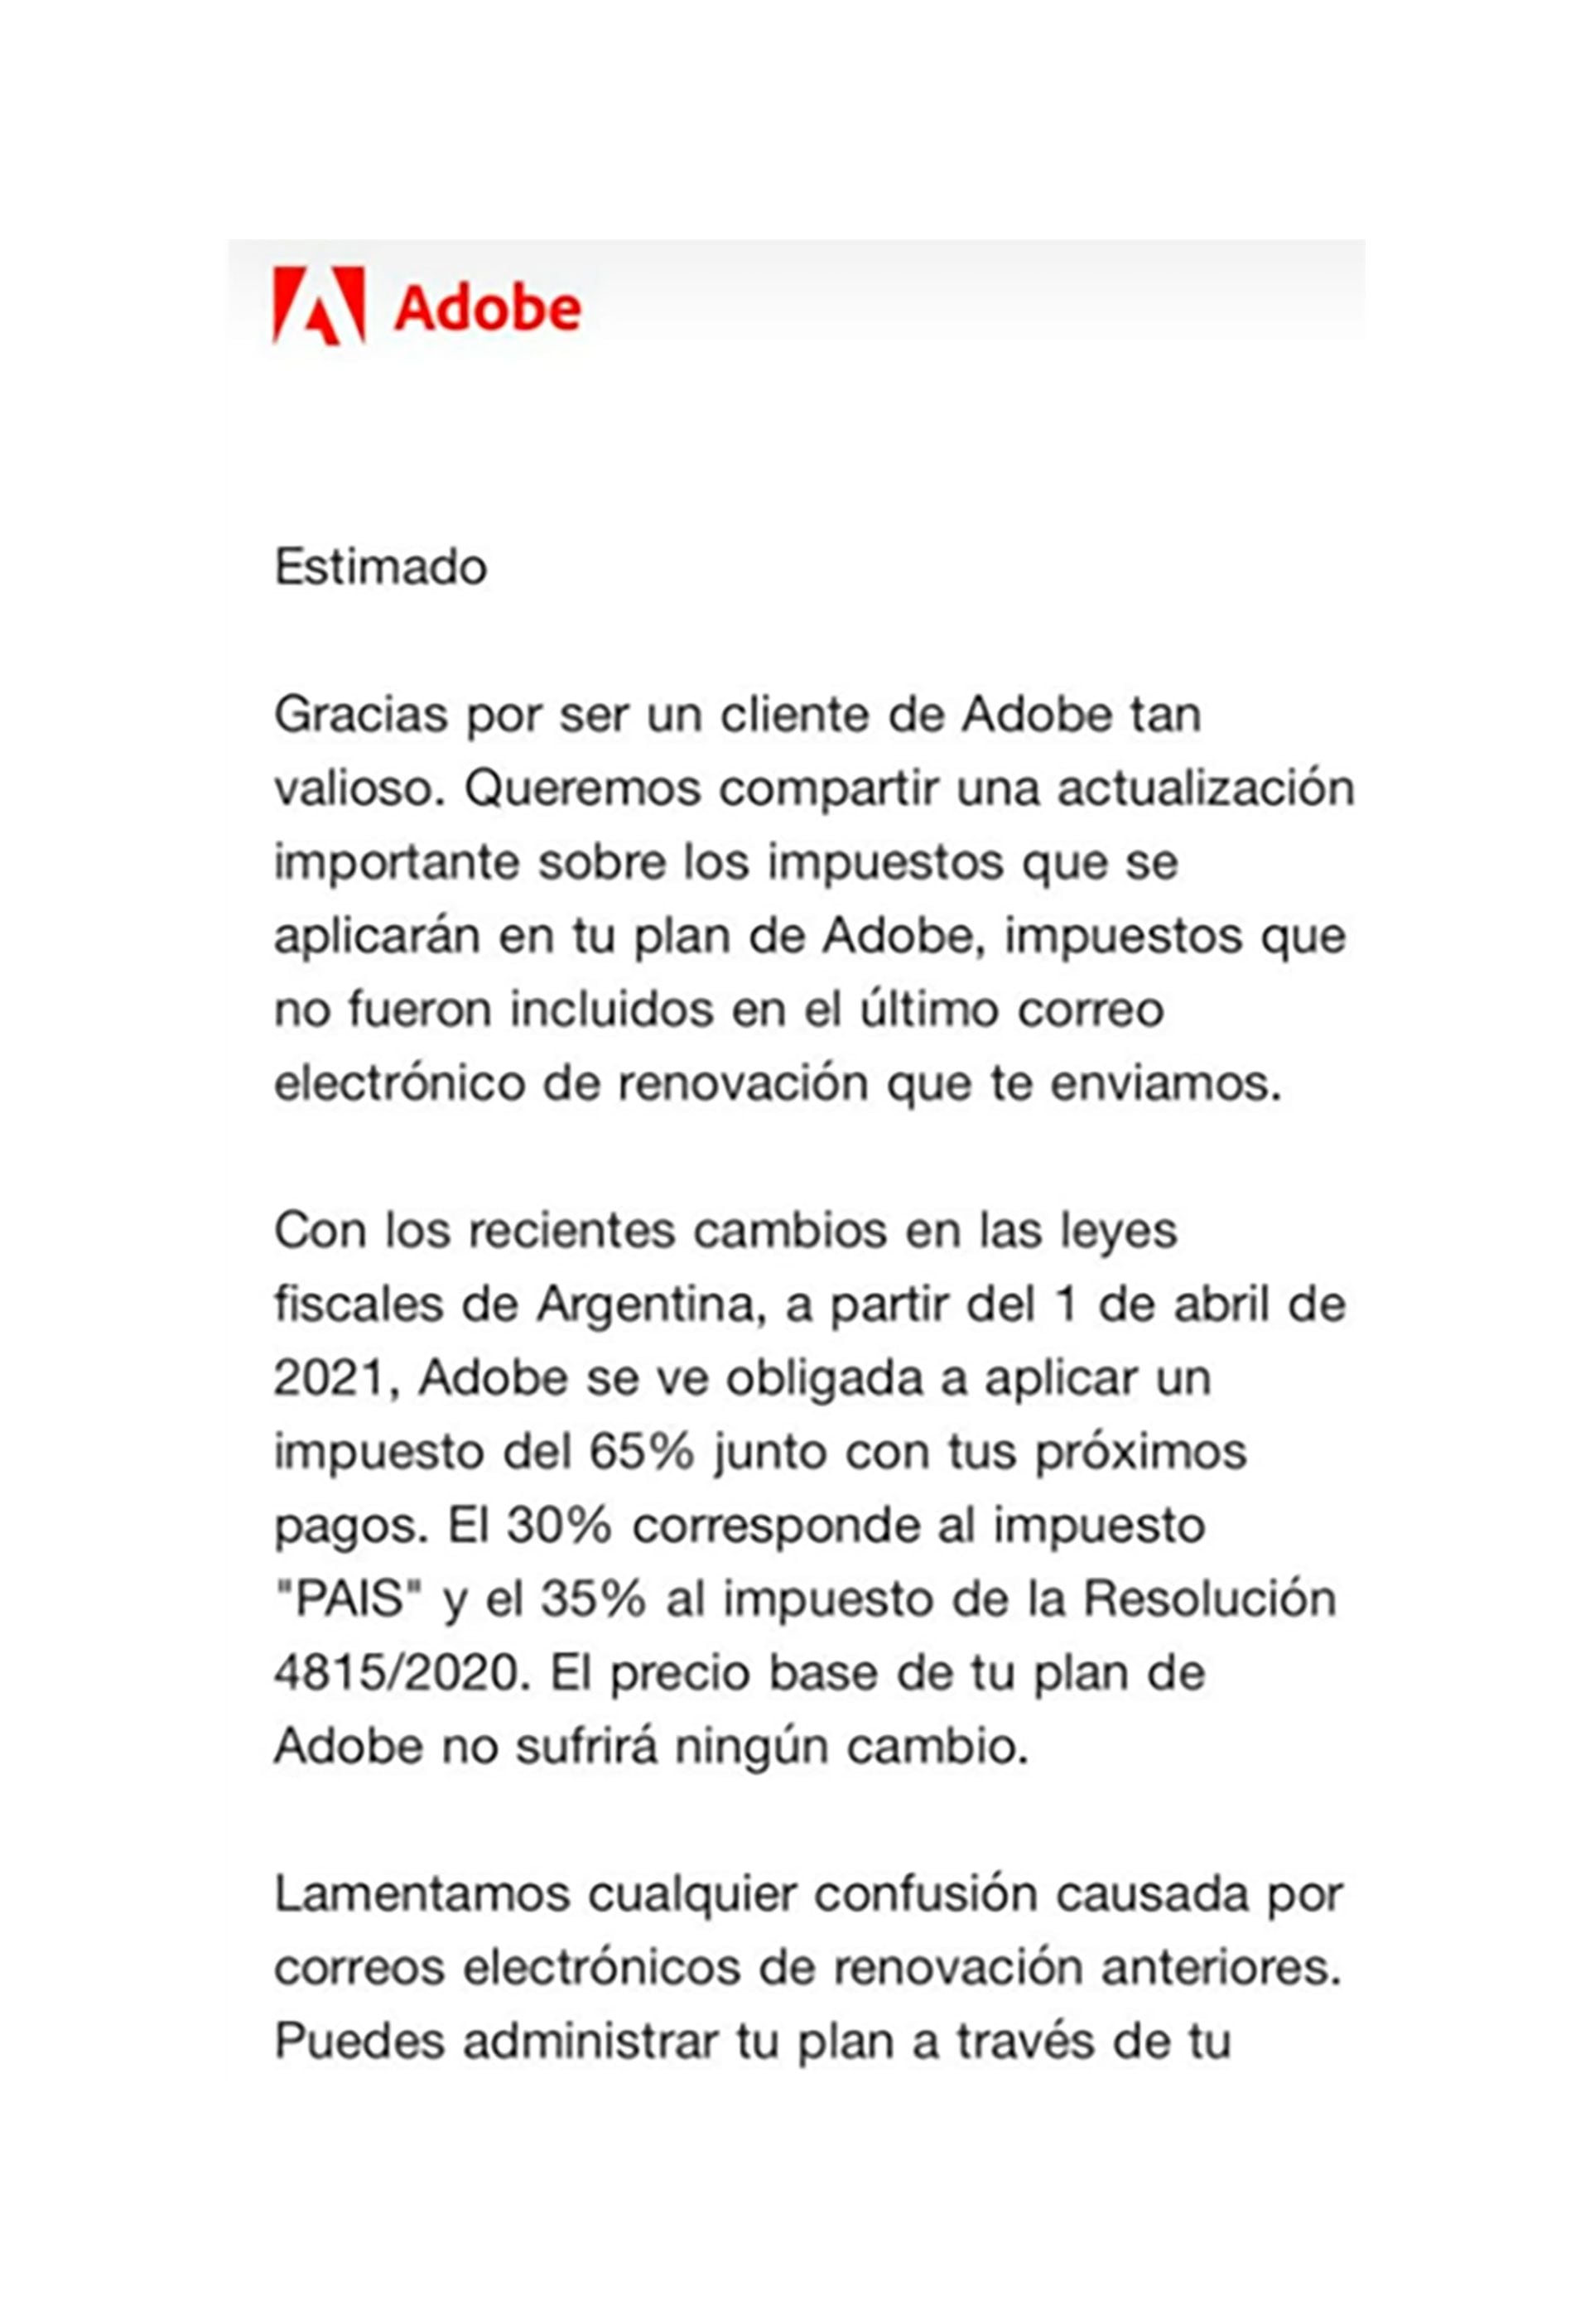 Adobe-Aumento-Resolucion-4815-Impuesto-PAIS